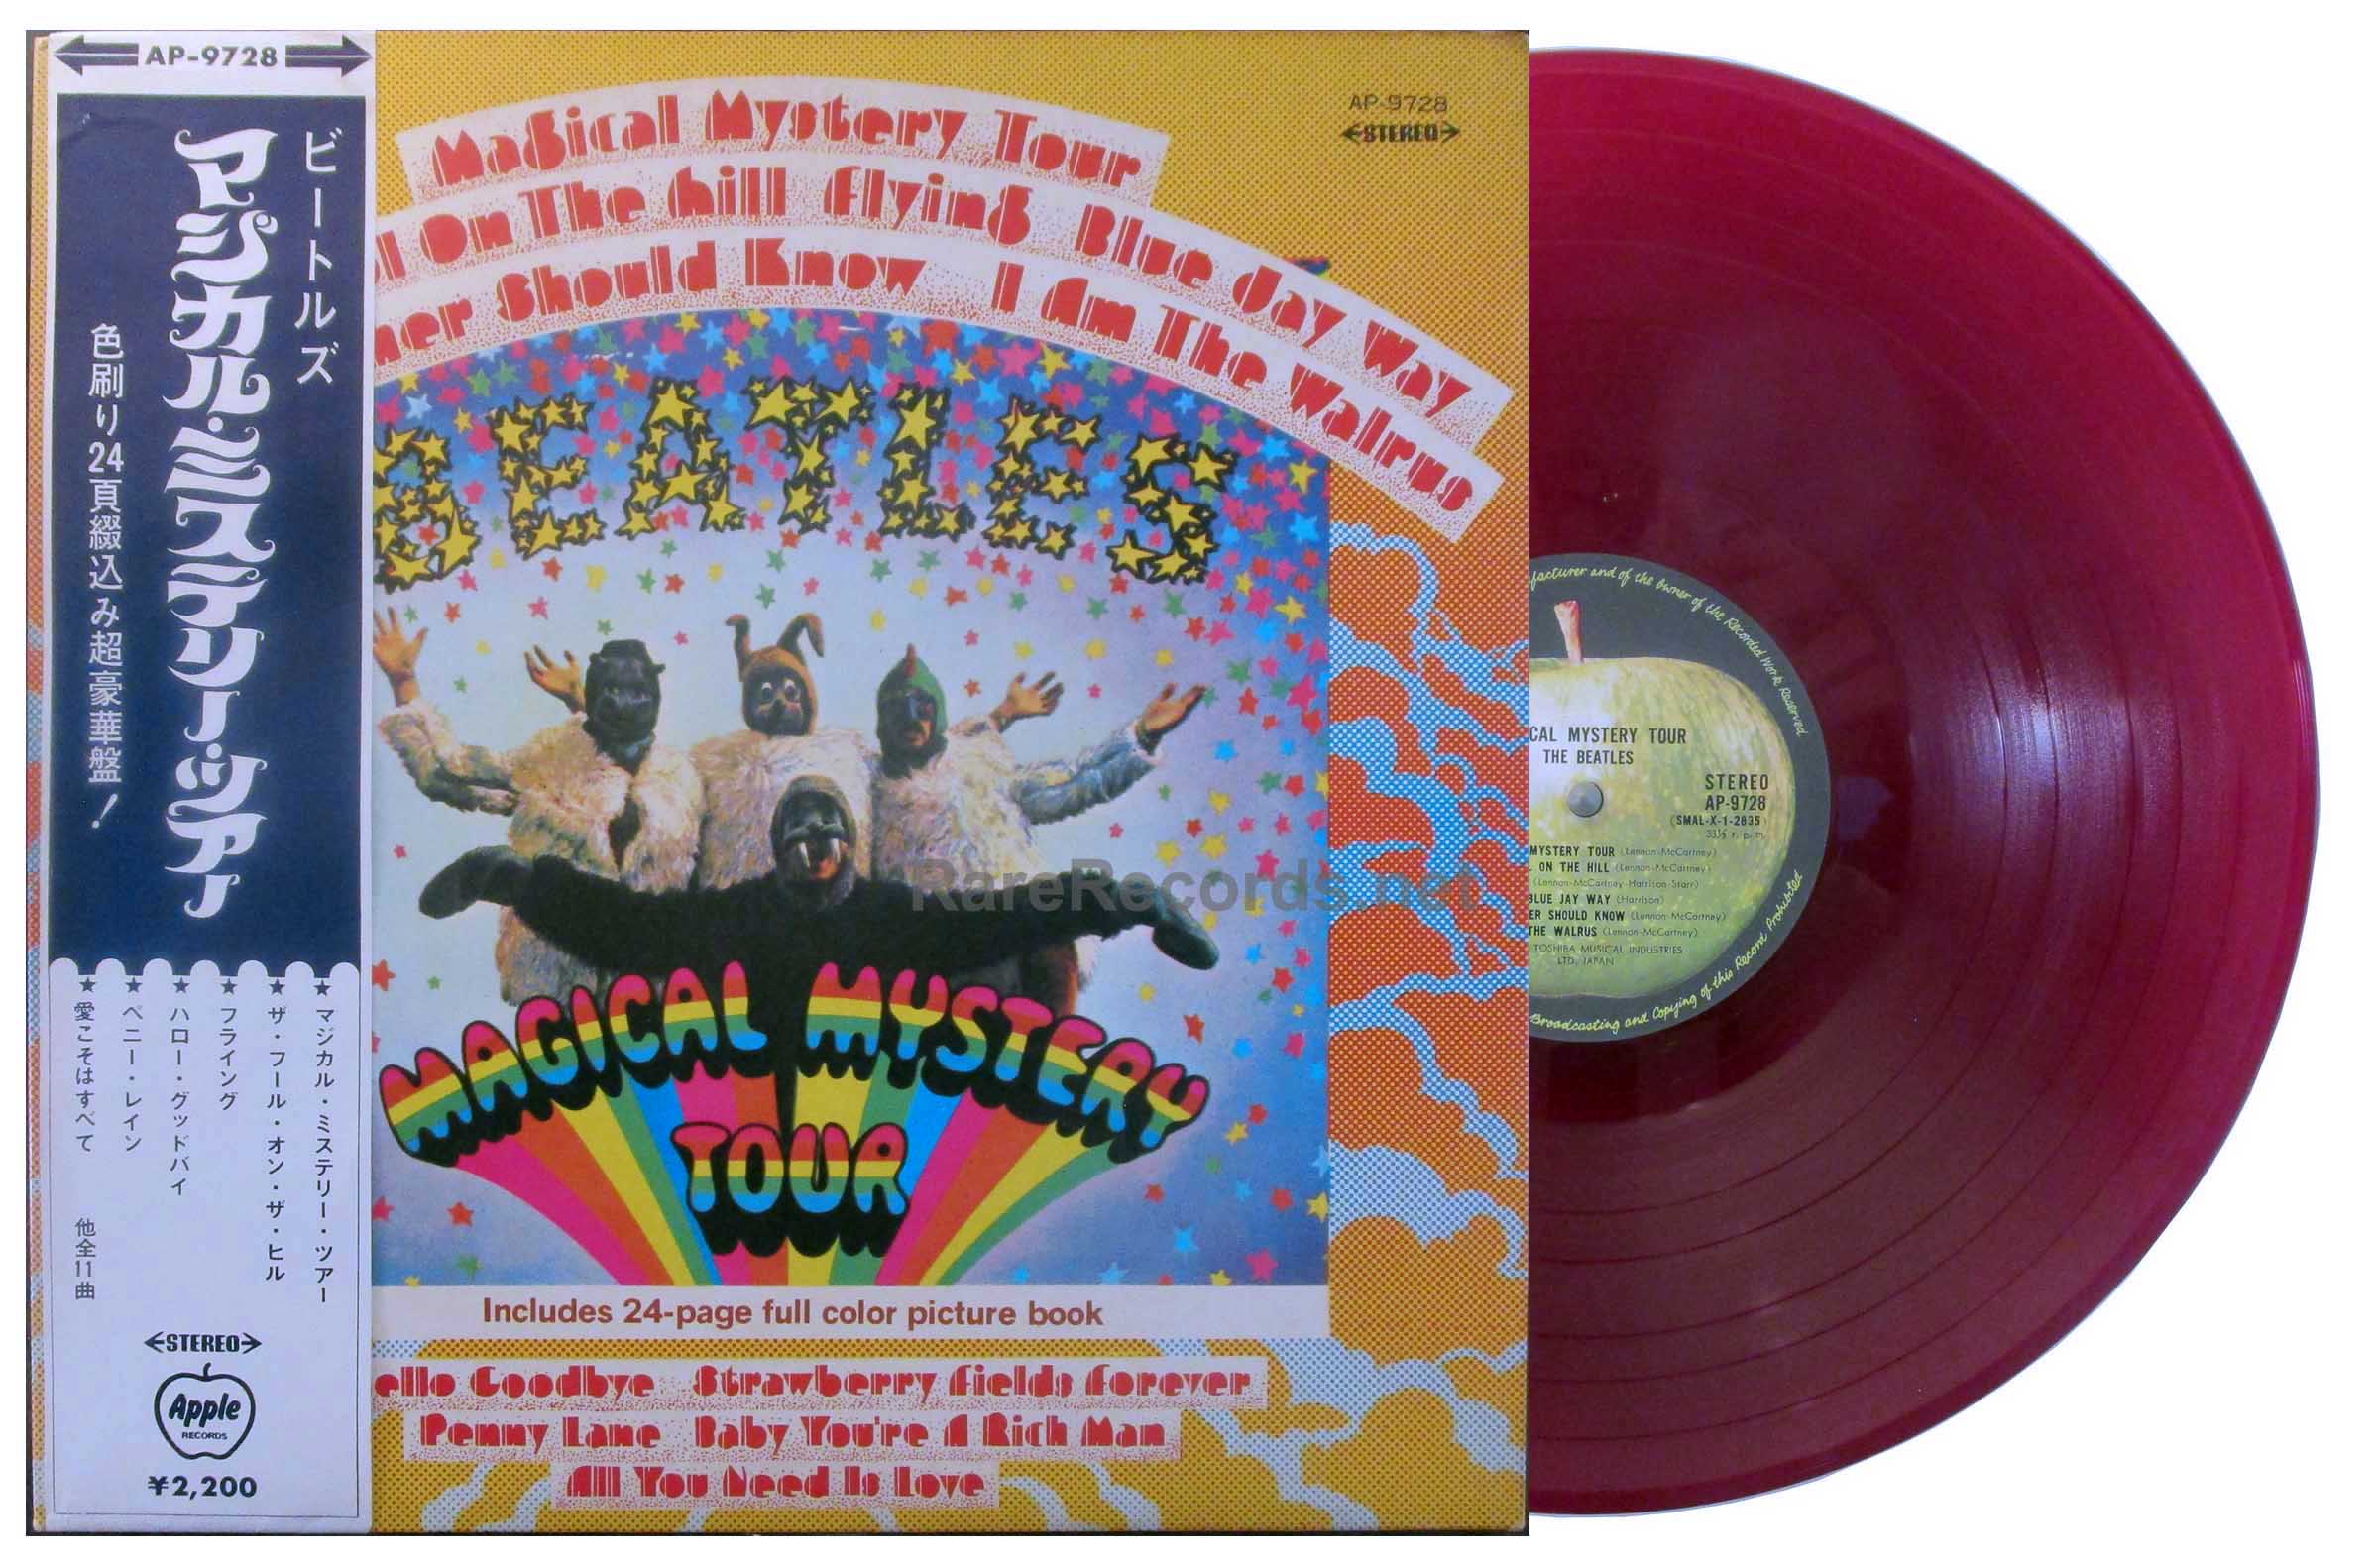 Beatles - Magical Mystery Tour Japan red vinyl lp